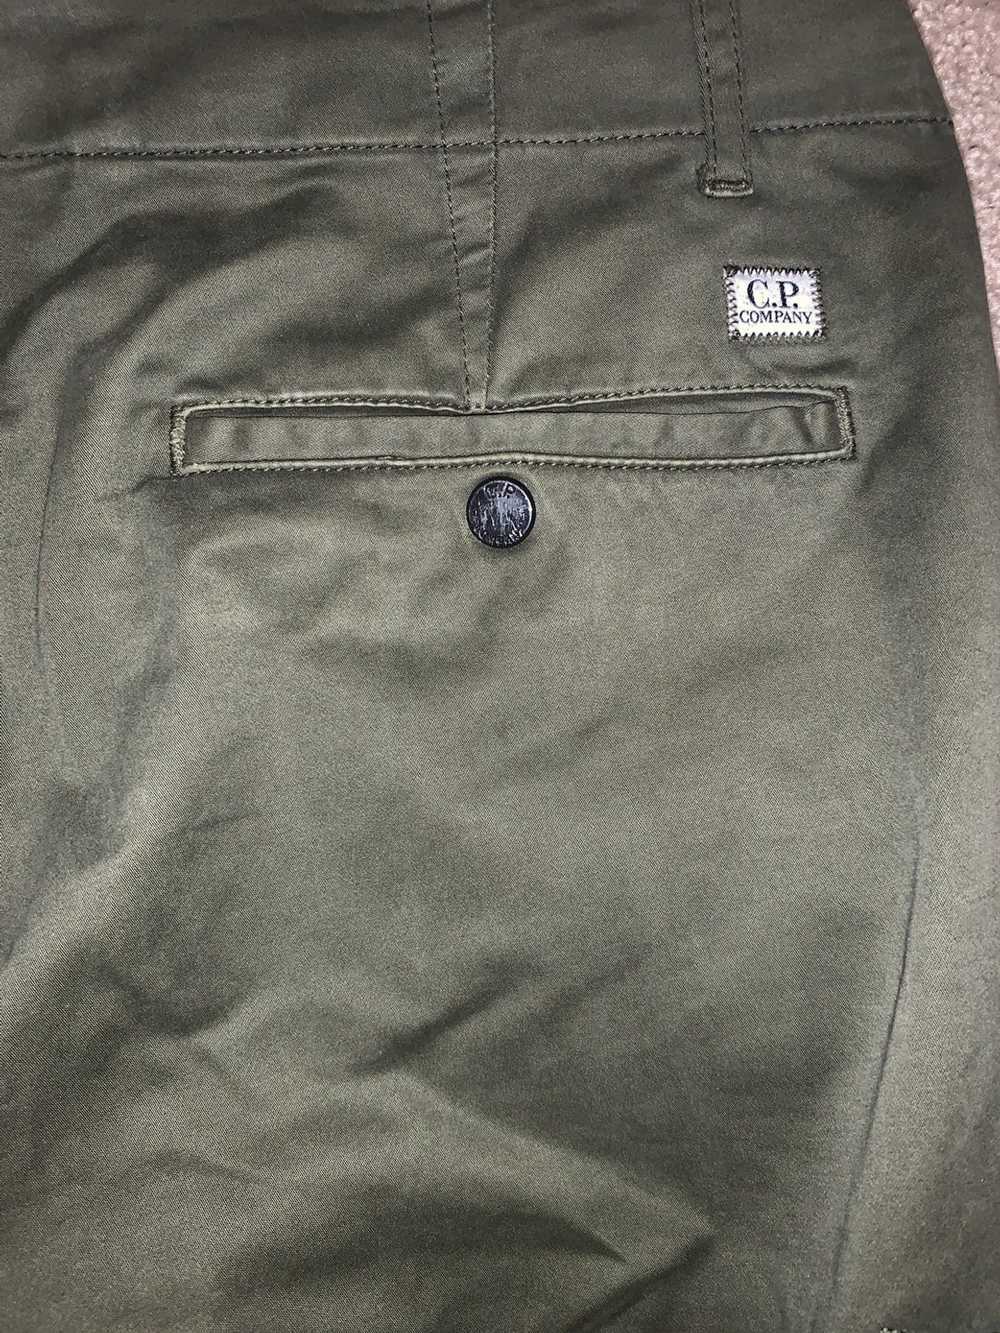 C.P. Company Cp company cargo pants - image 5